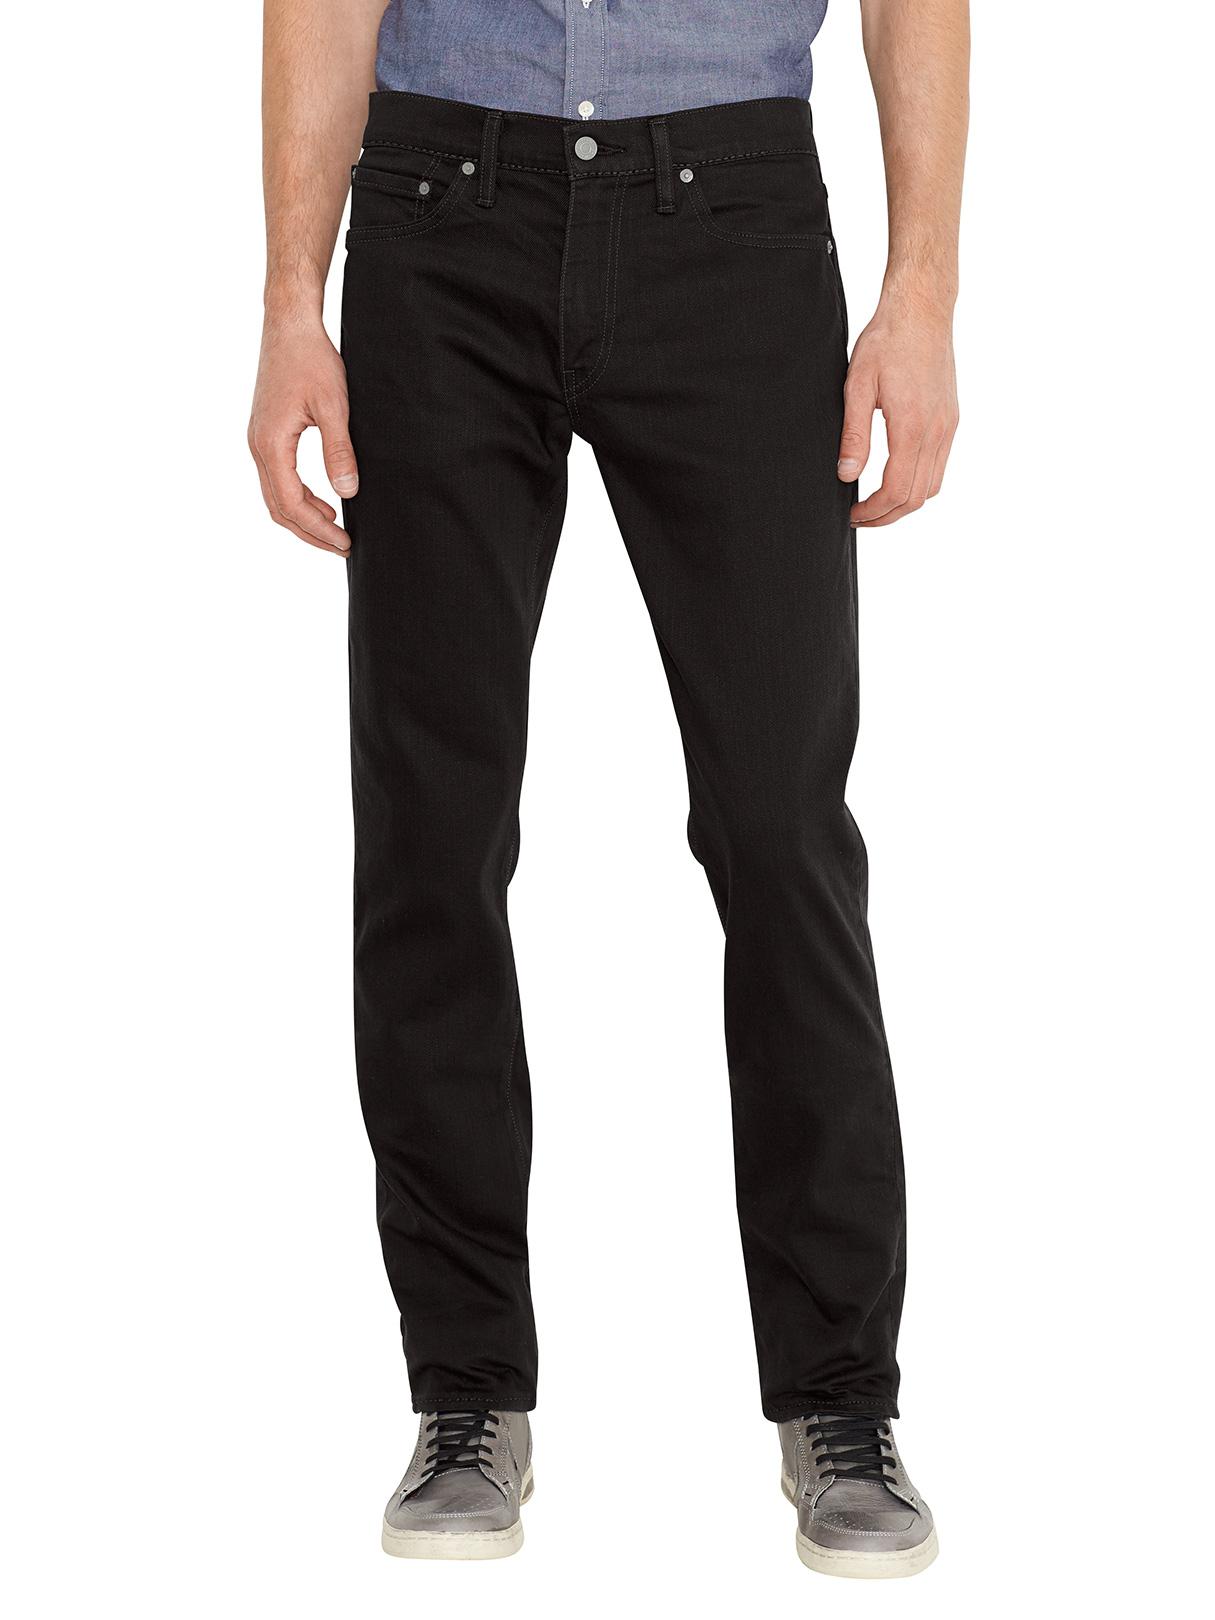 Levi's Denim Black 511 Slim Fit Nightshine Jeans for Men - Lyst